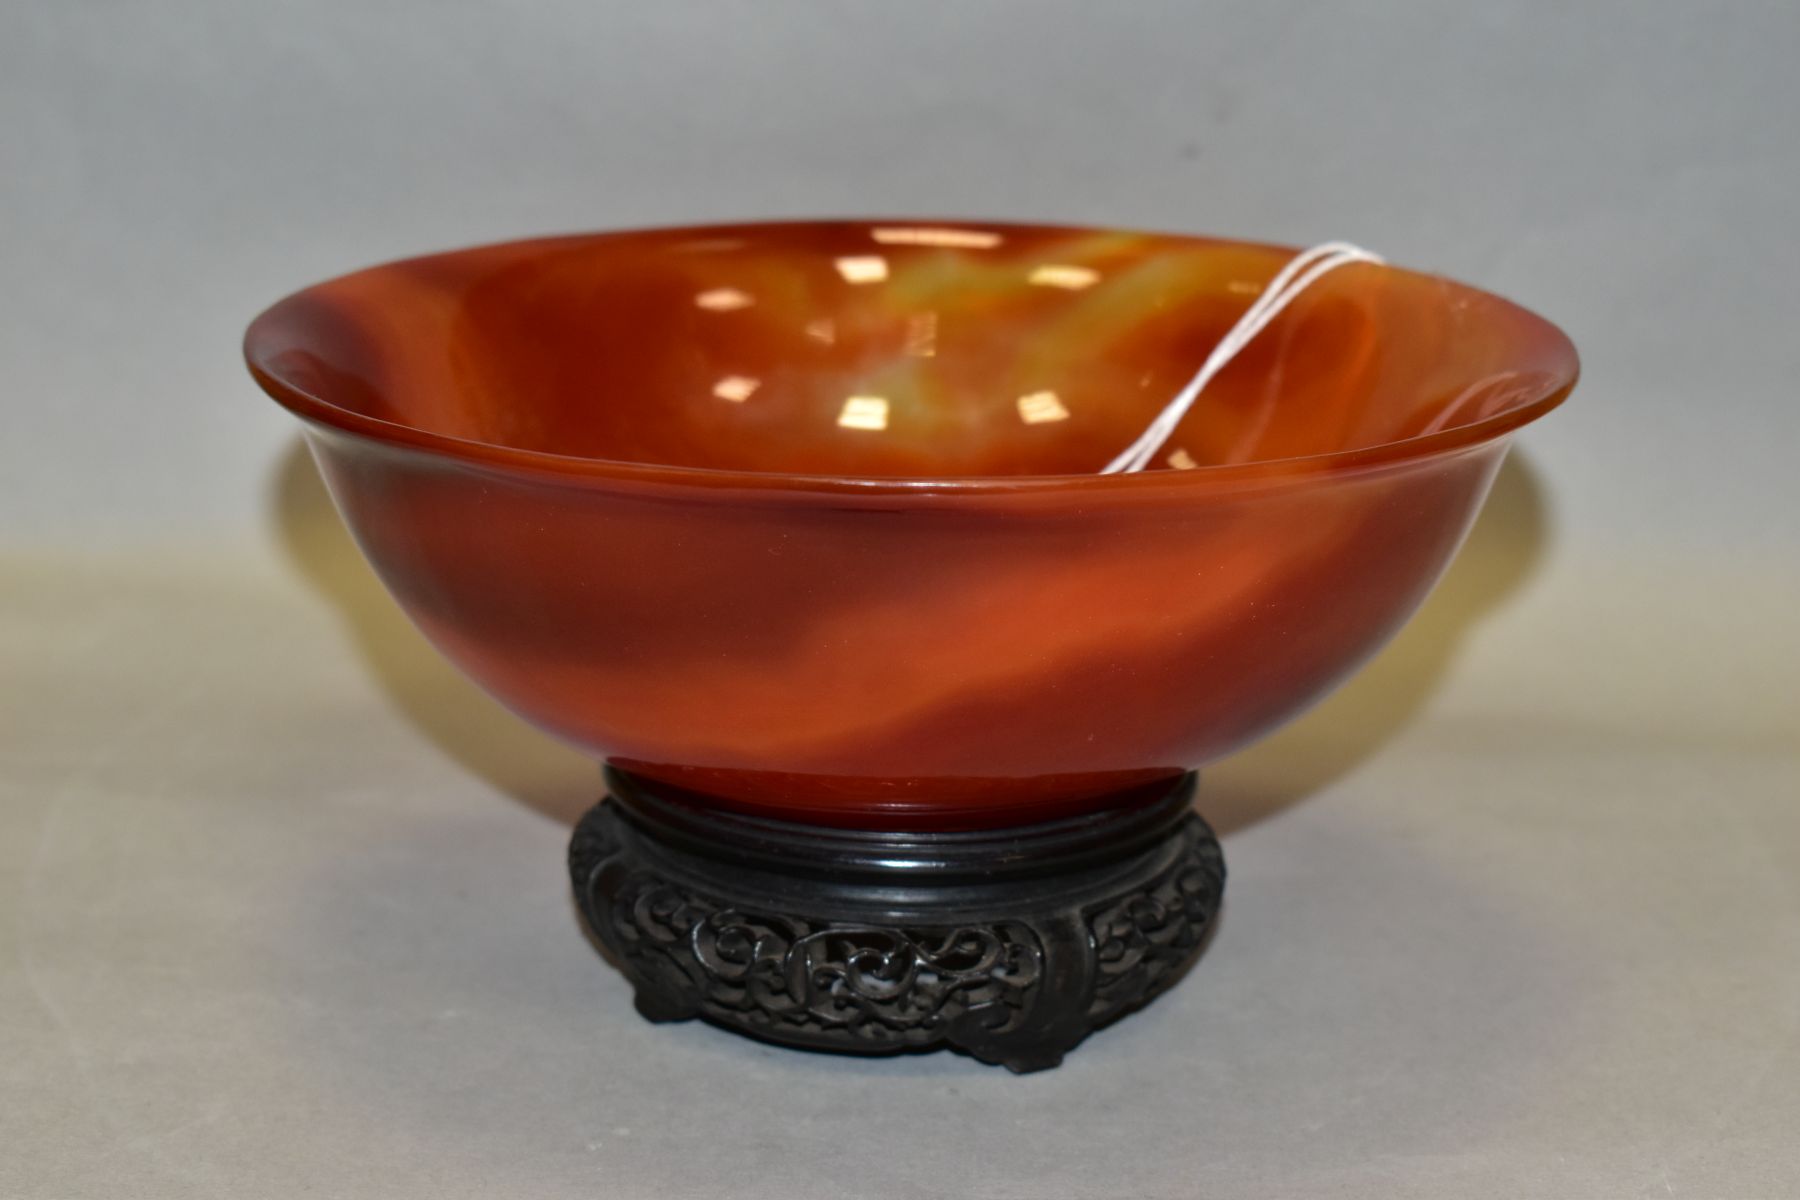 A CHINESE AGATE BOWL, semi translucent striated amber tones, short circular foot, diameter 18.8cm,